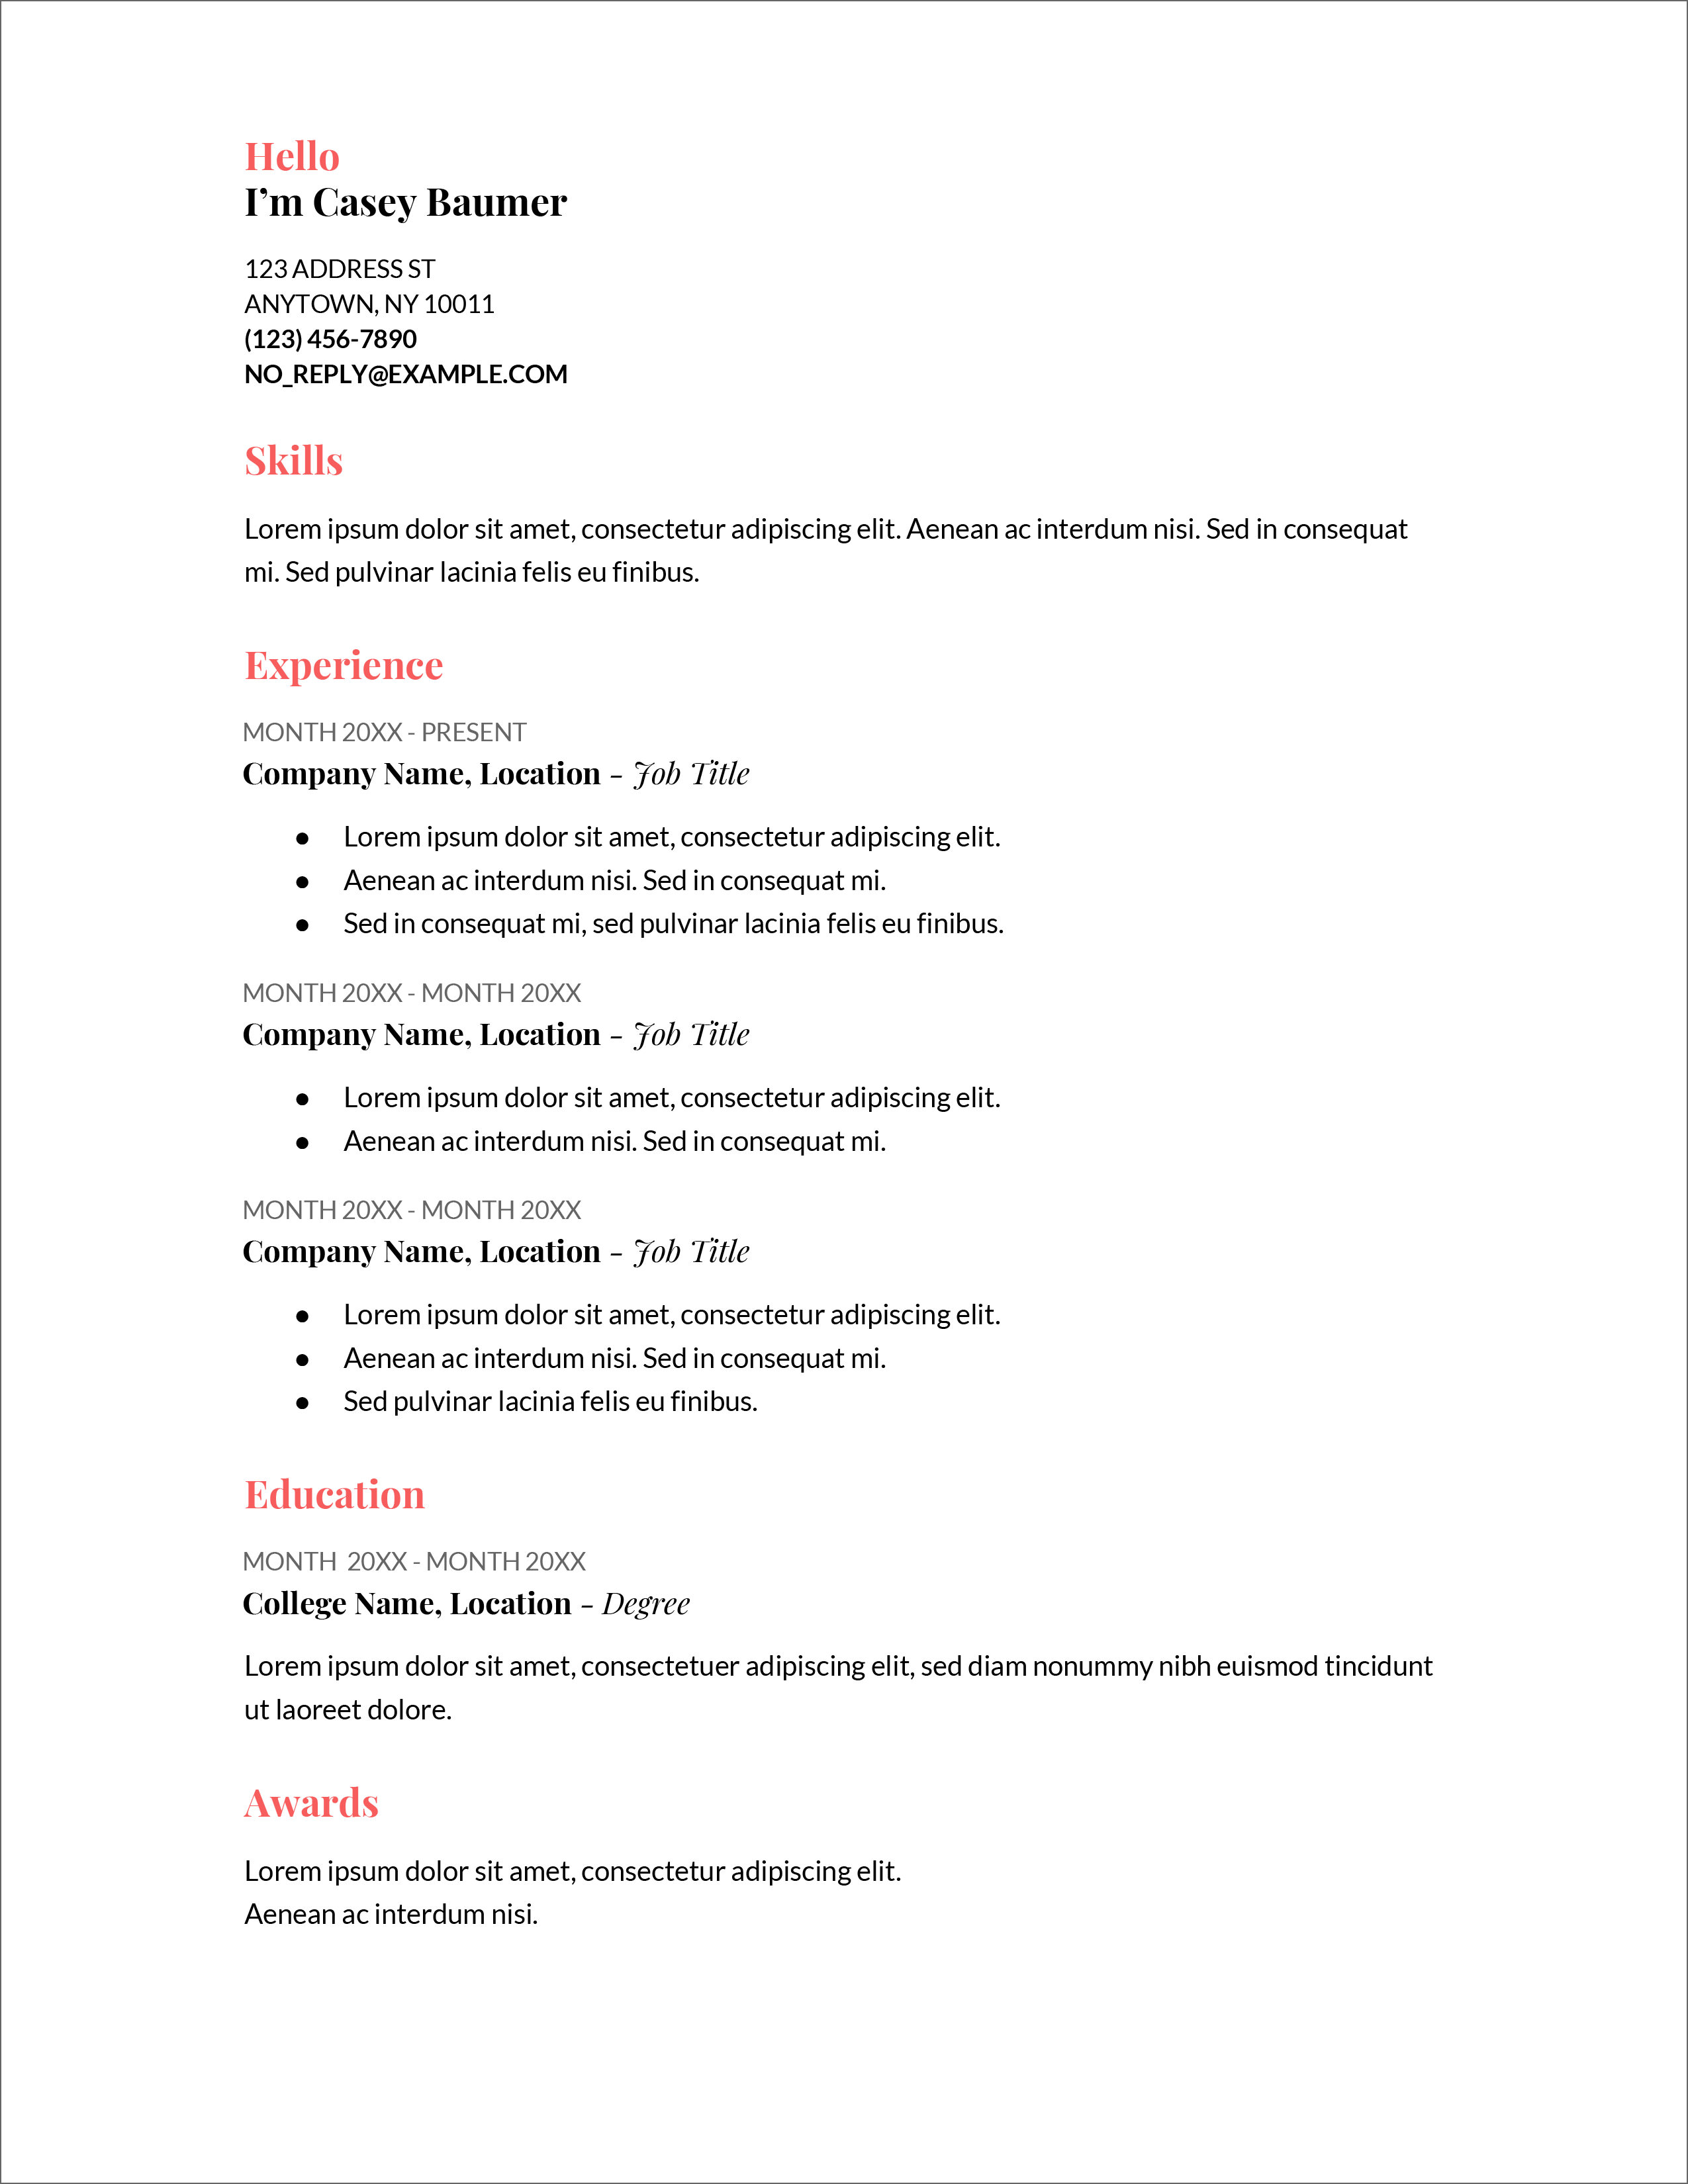 45-free-modern-resume-cv-templates-minimalist-simple-clean-design